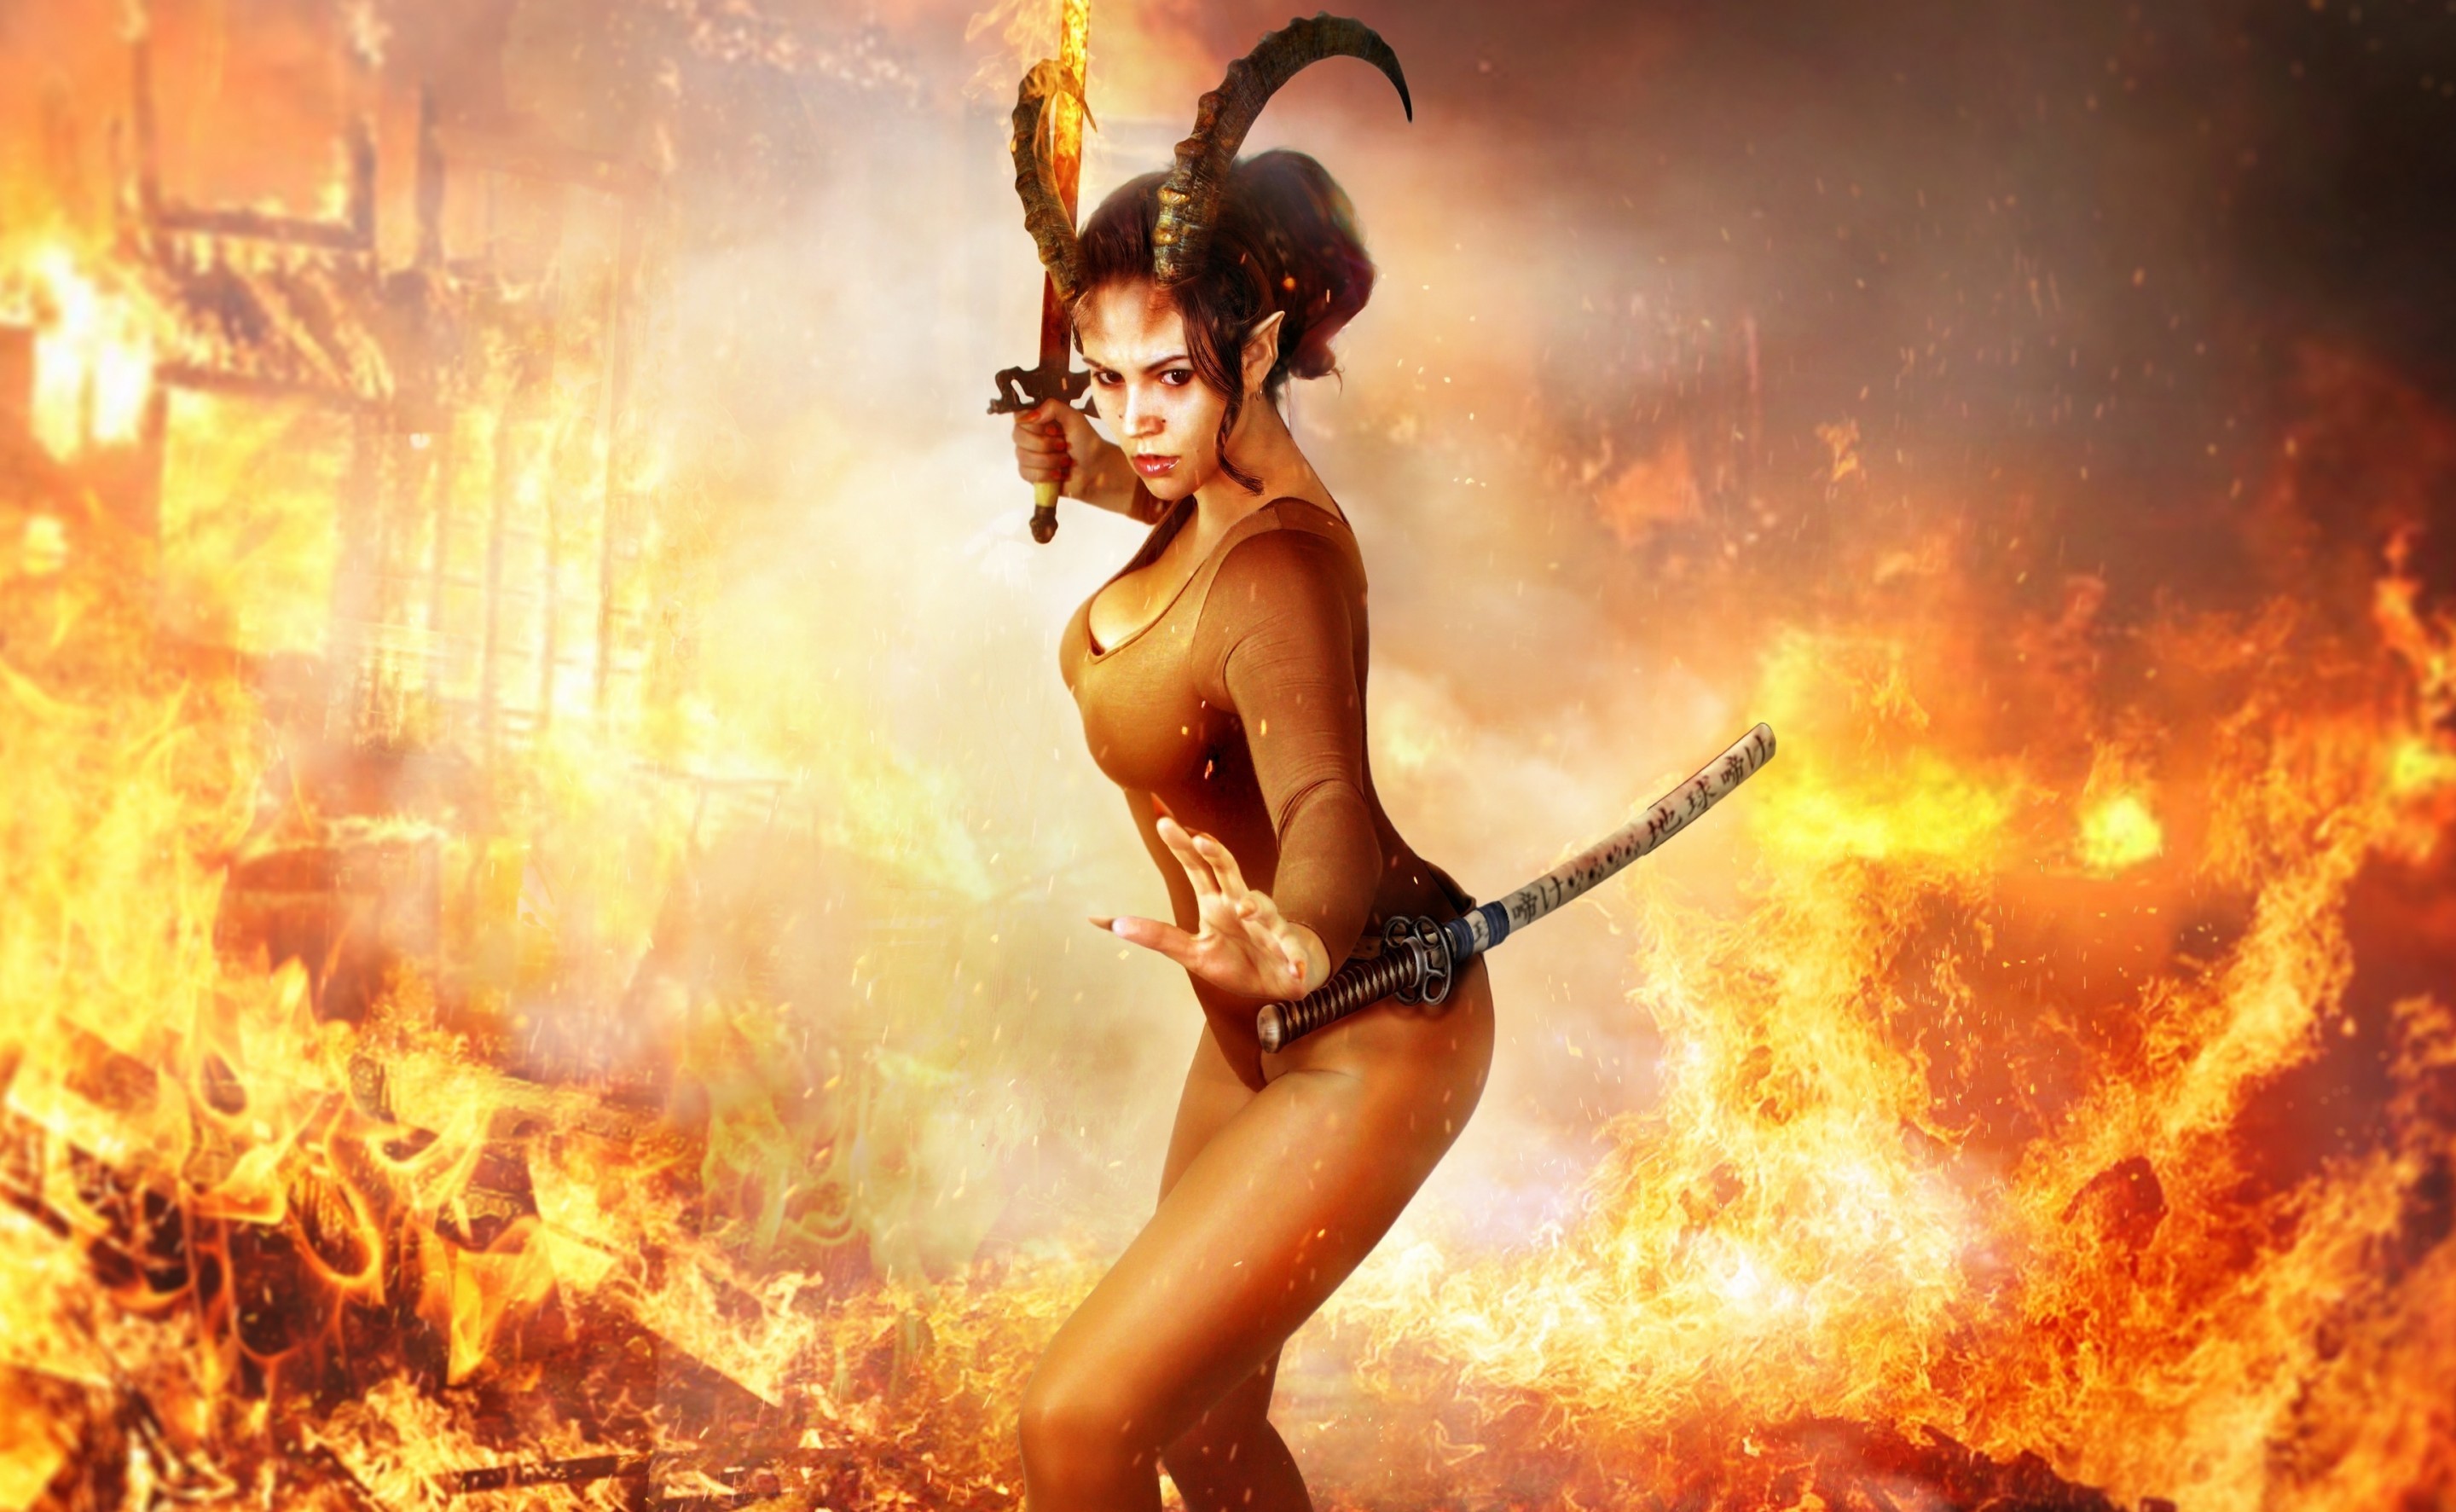 General 2880x1773 fantasy art warrior horns sword fire fantasy girl women with swords weapon bodysuit burning women